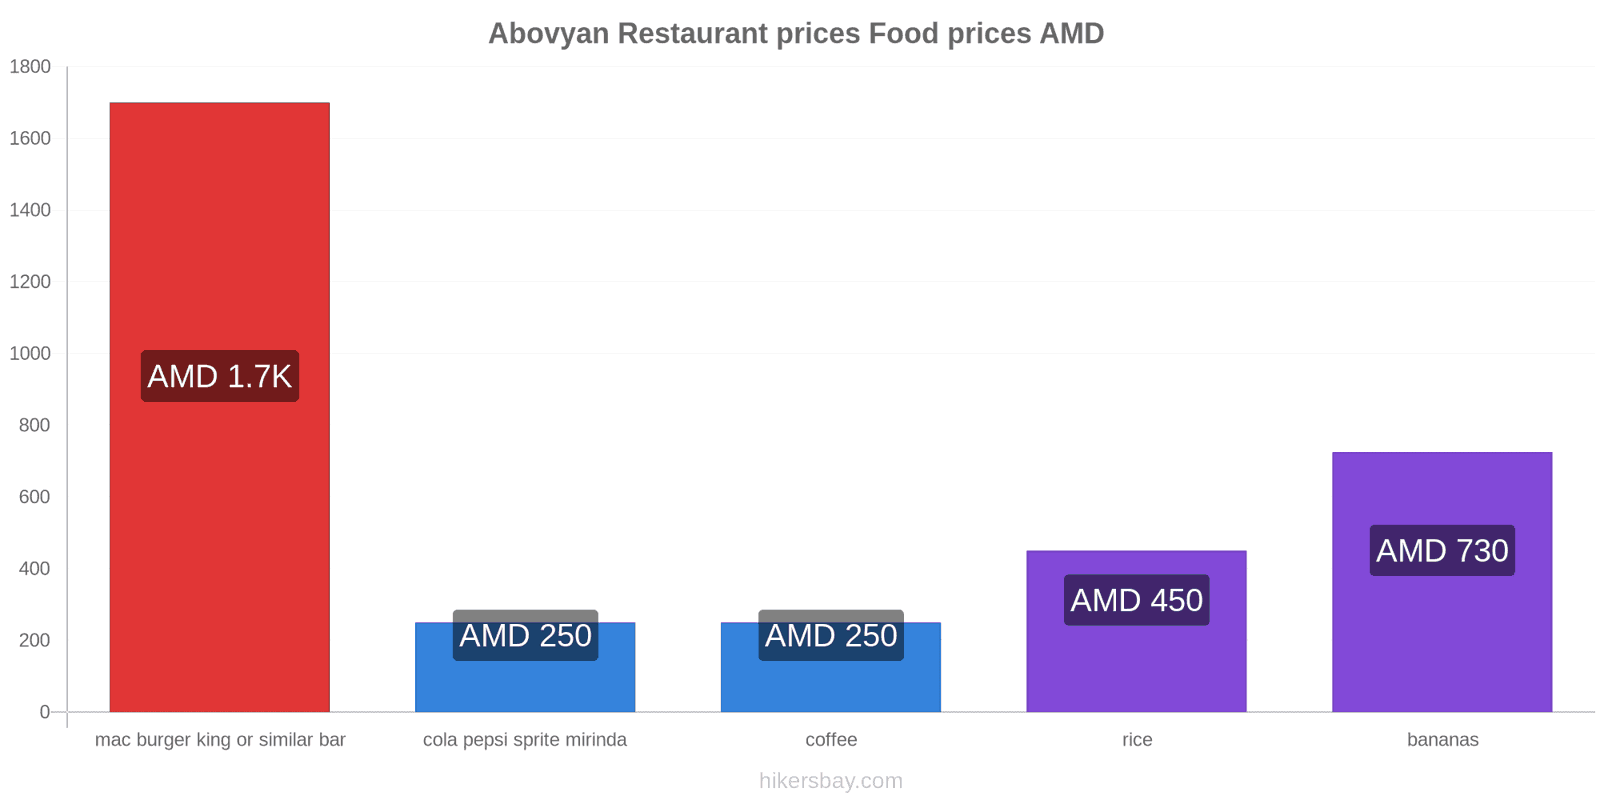 Abovyan price changes hikersbay.com